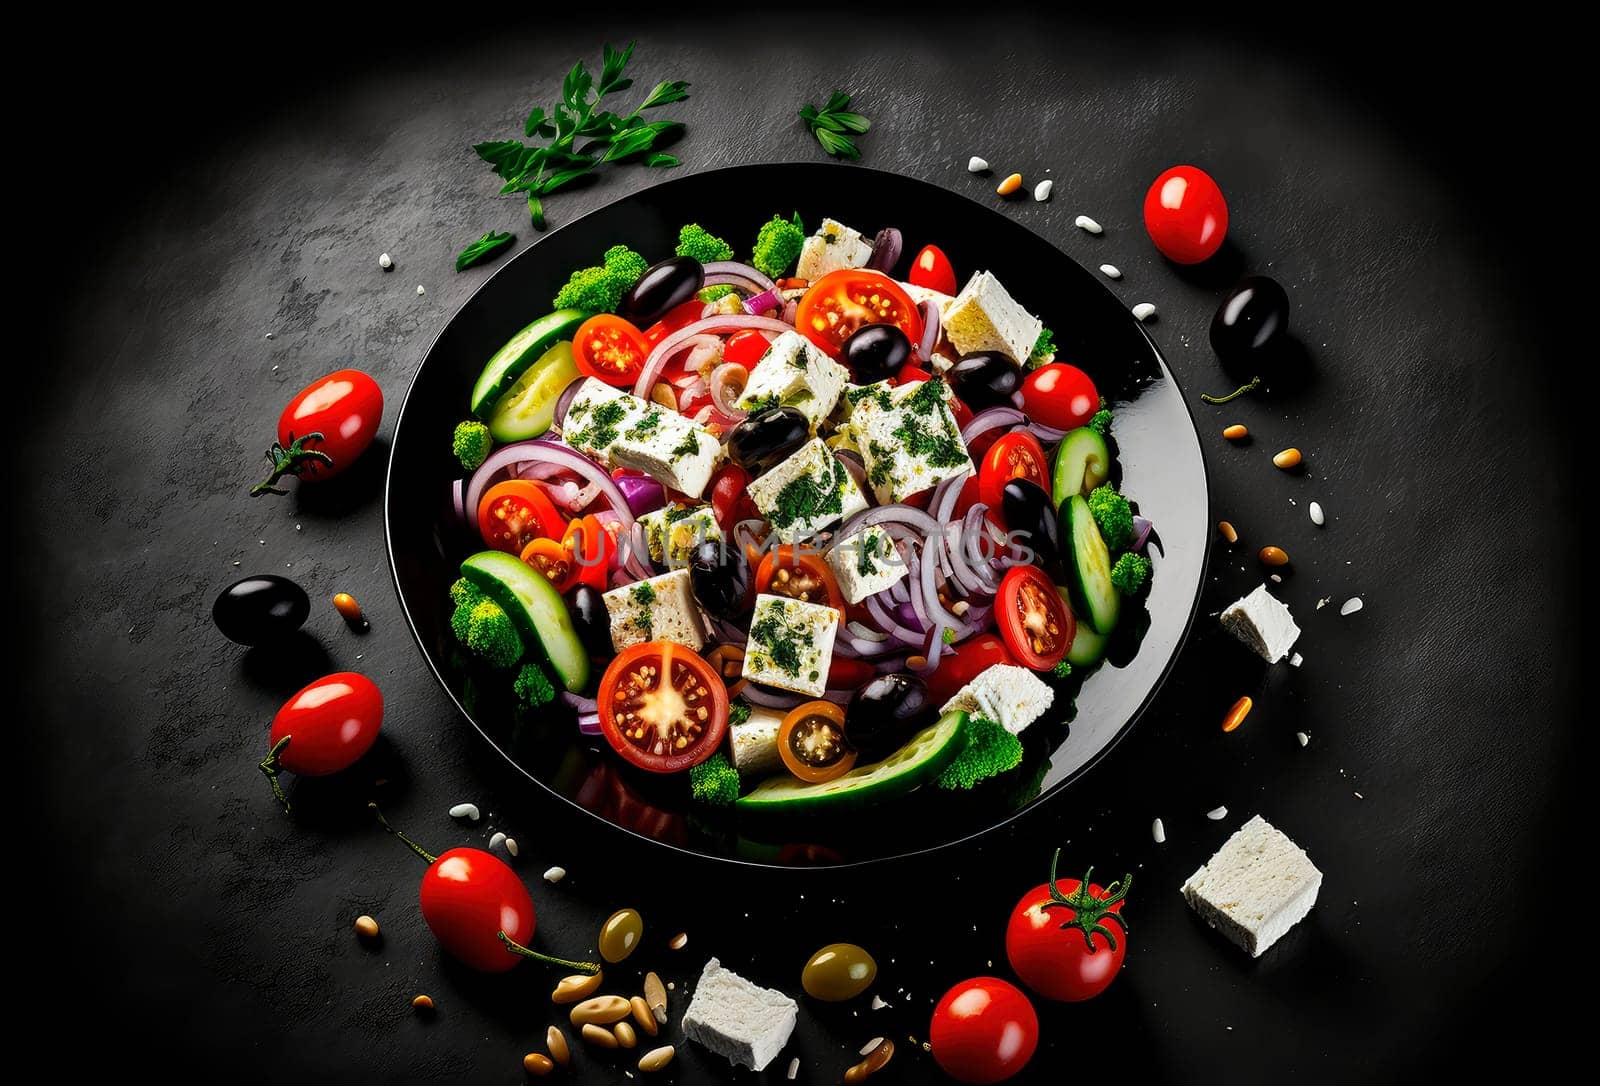 Greek salad, product studio photo, dark black background, fresh tomato and onion salad, by yanadjana